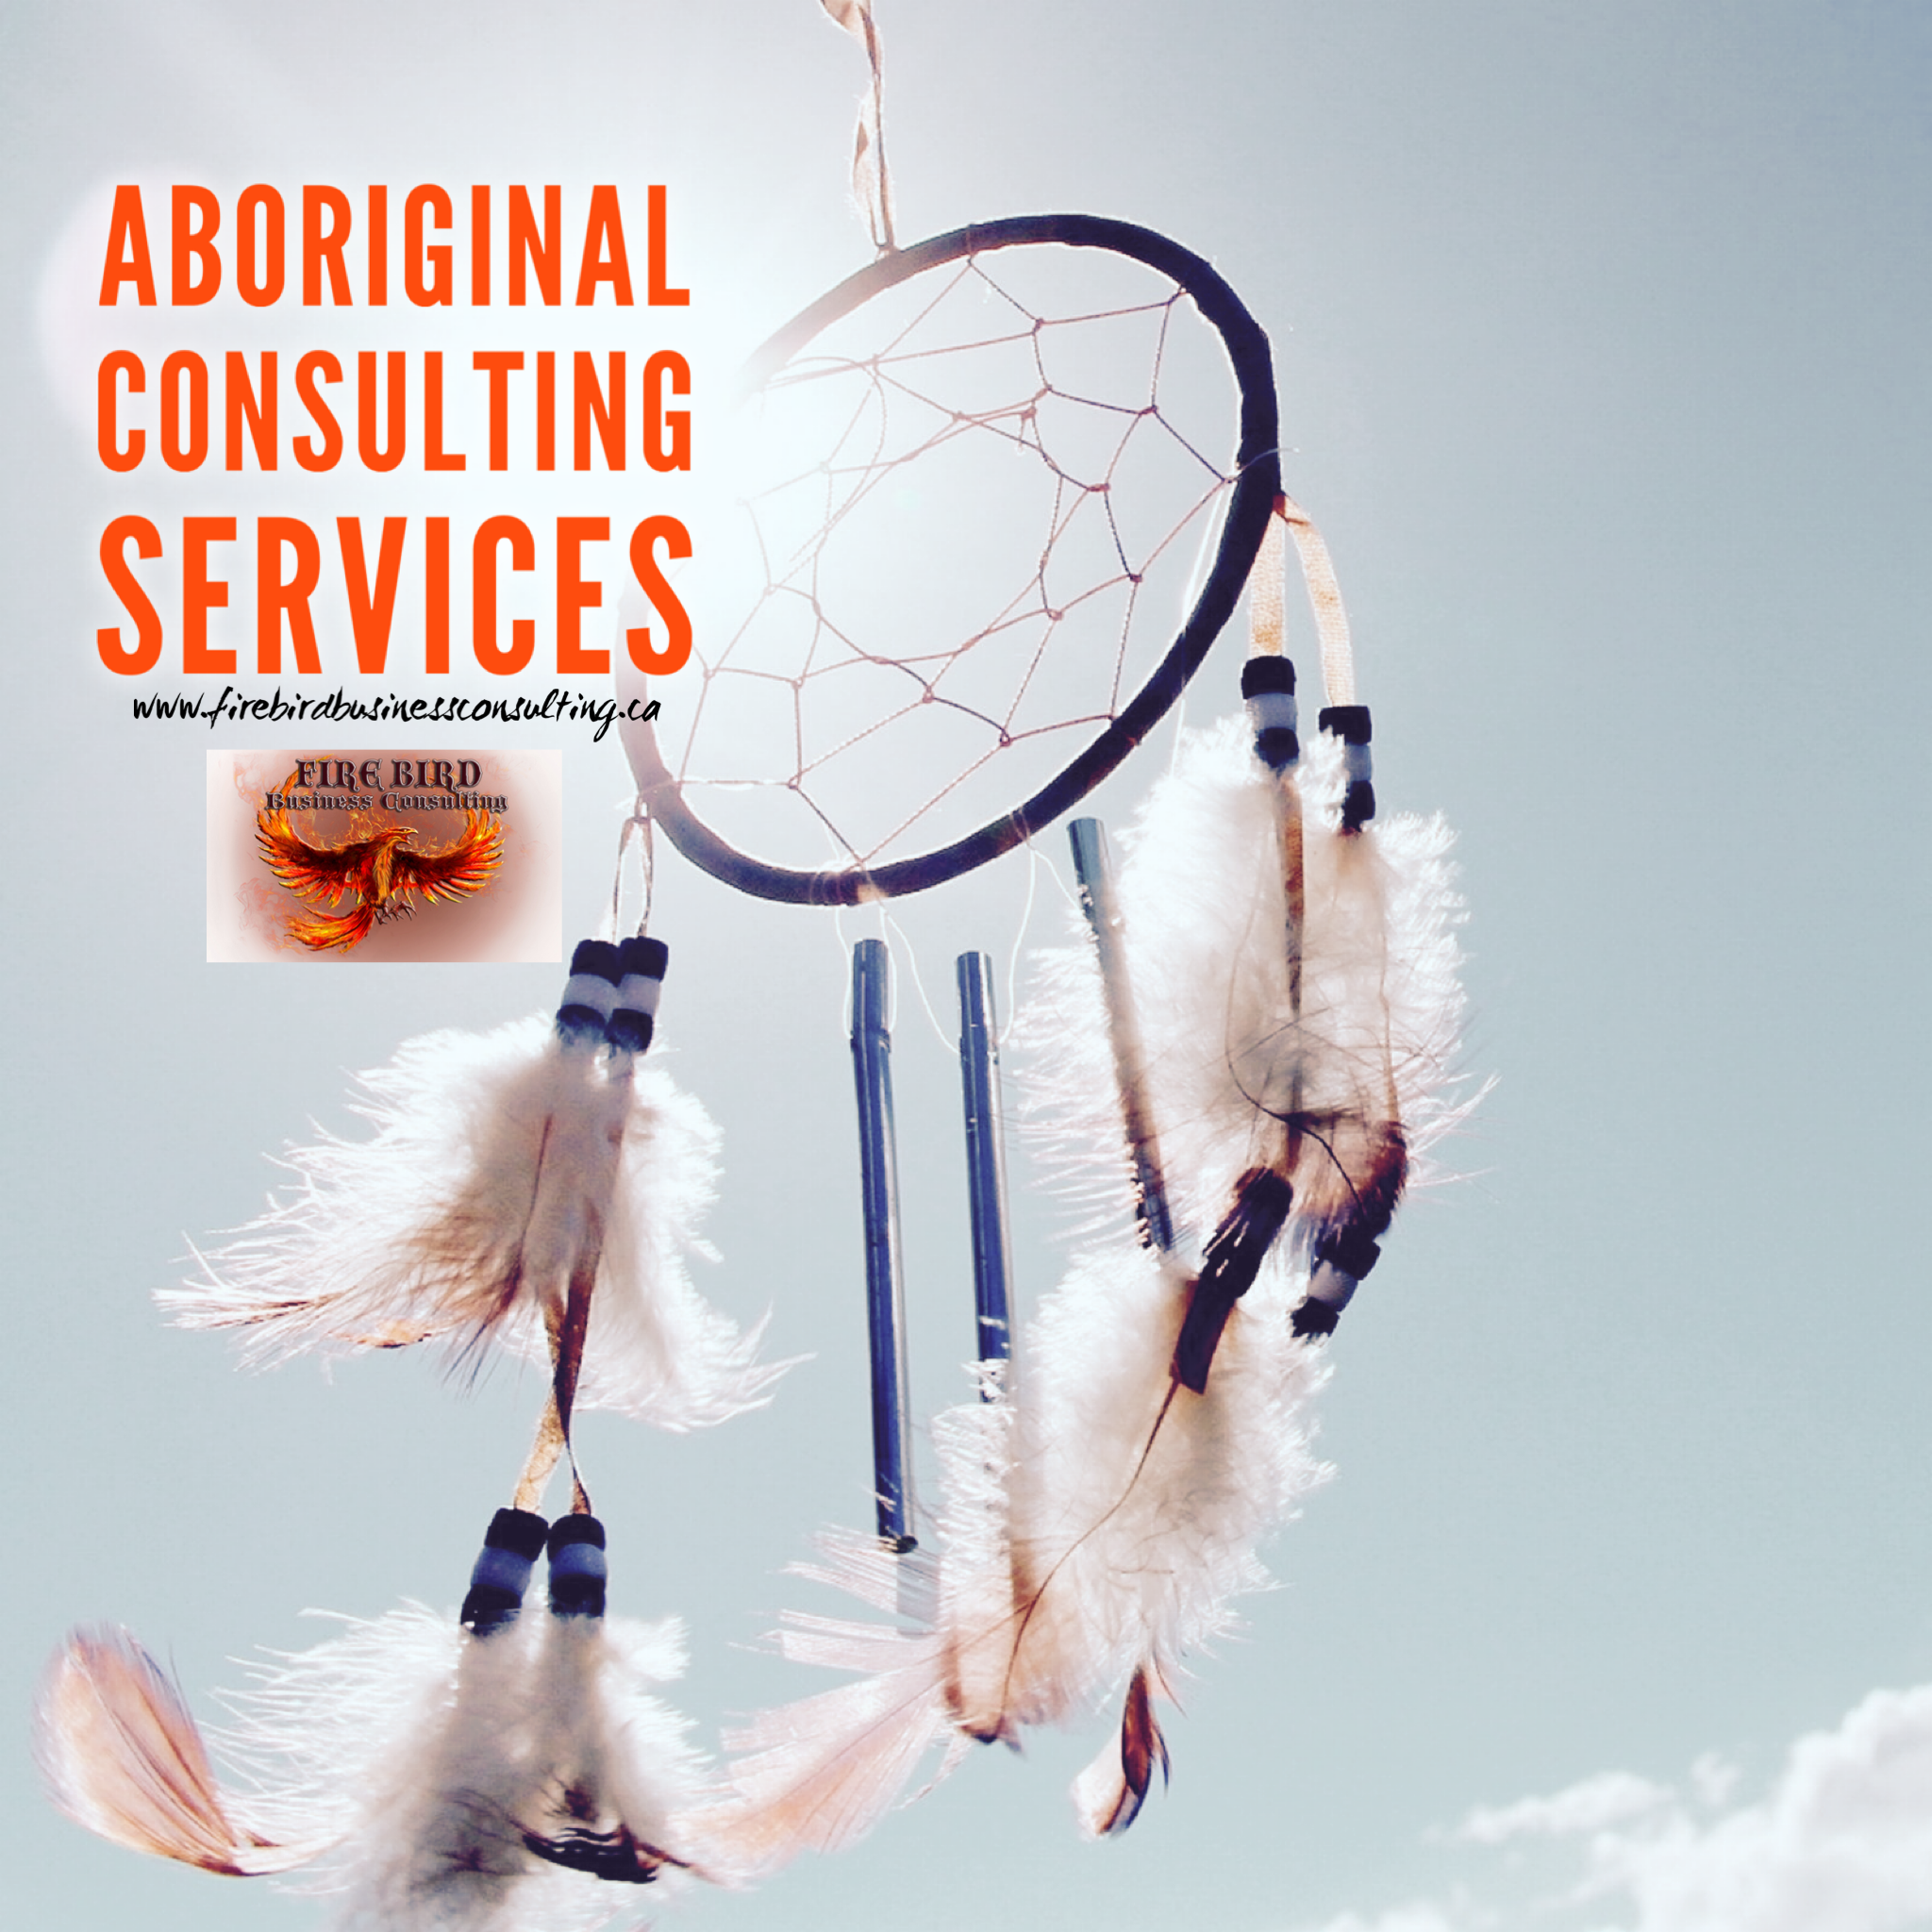 INDIGENOUS AND ABORIGINAL CONSULTING SERVICES – Firebird Business Consulting Ltd. – Saskatoon – Regina – Saskatchewan